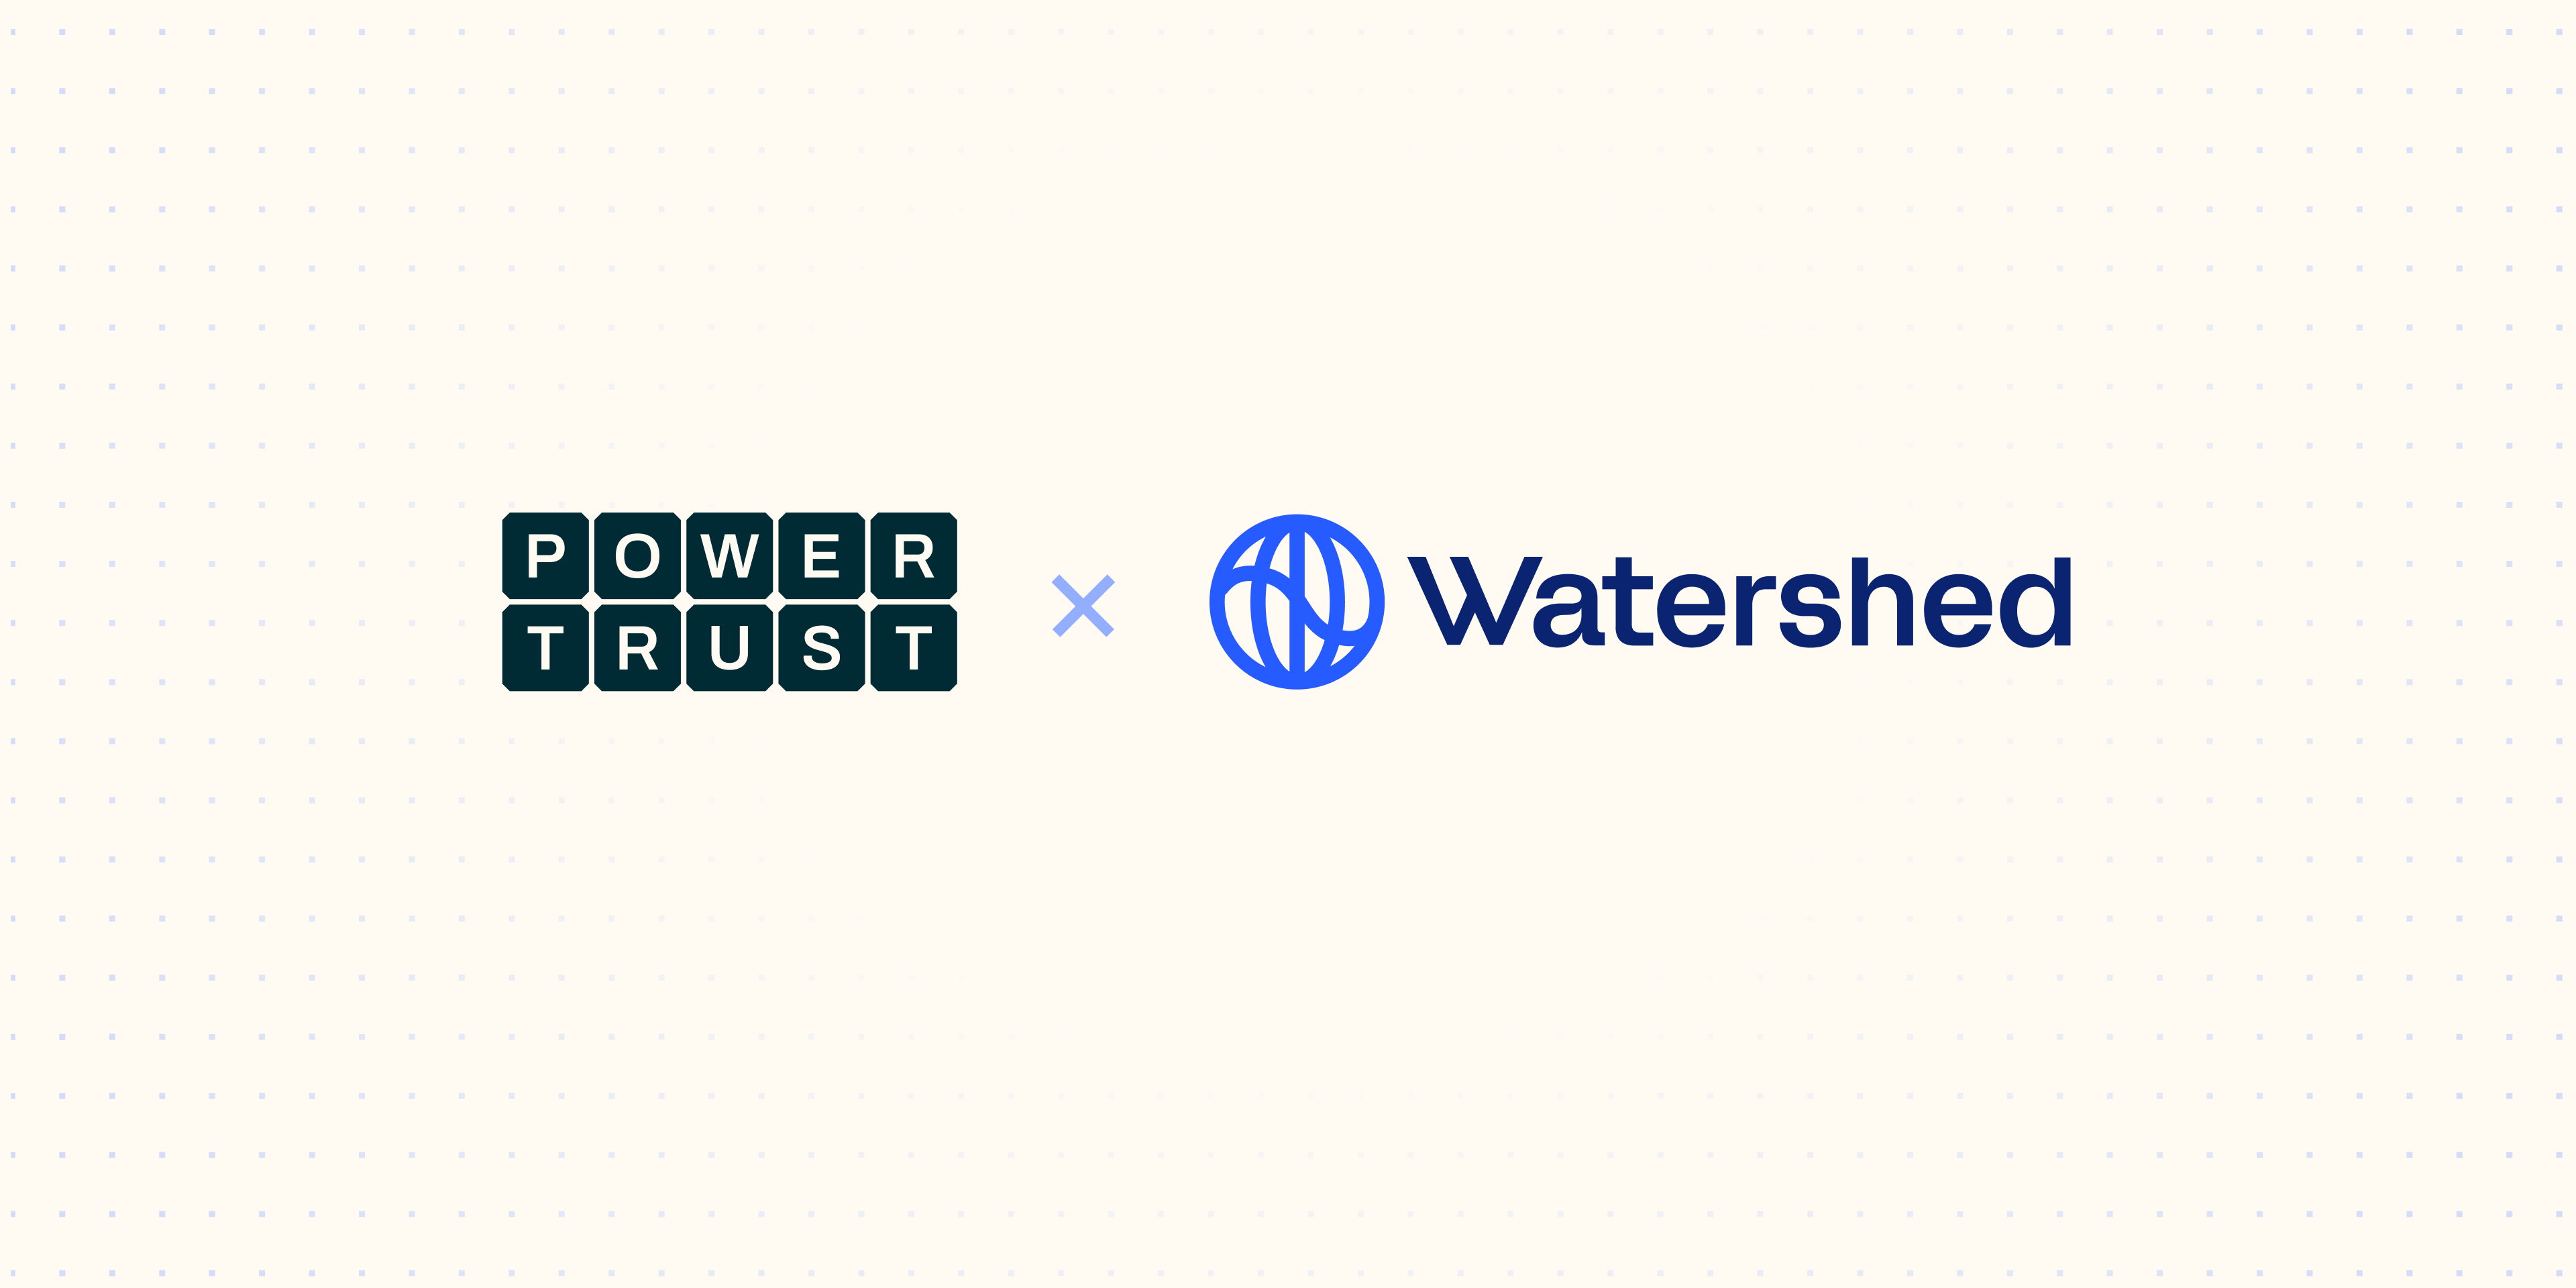 Powertrust and Watershed logos